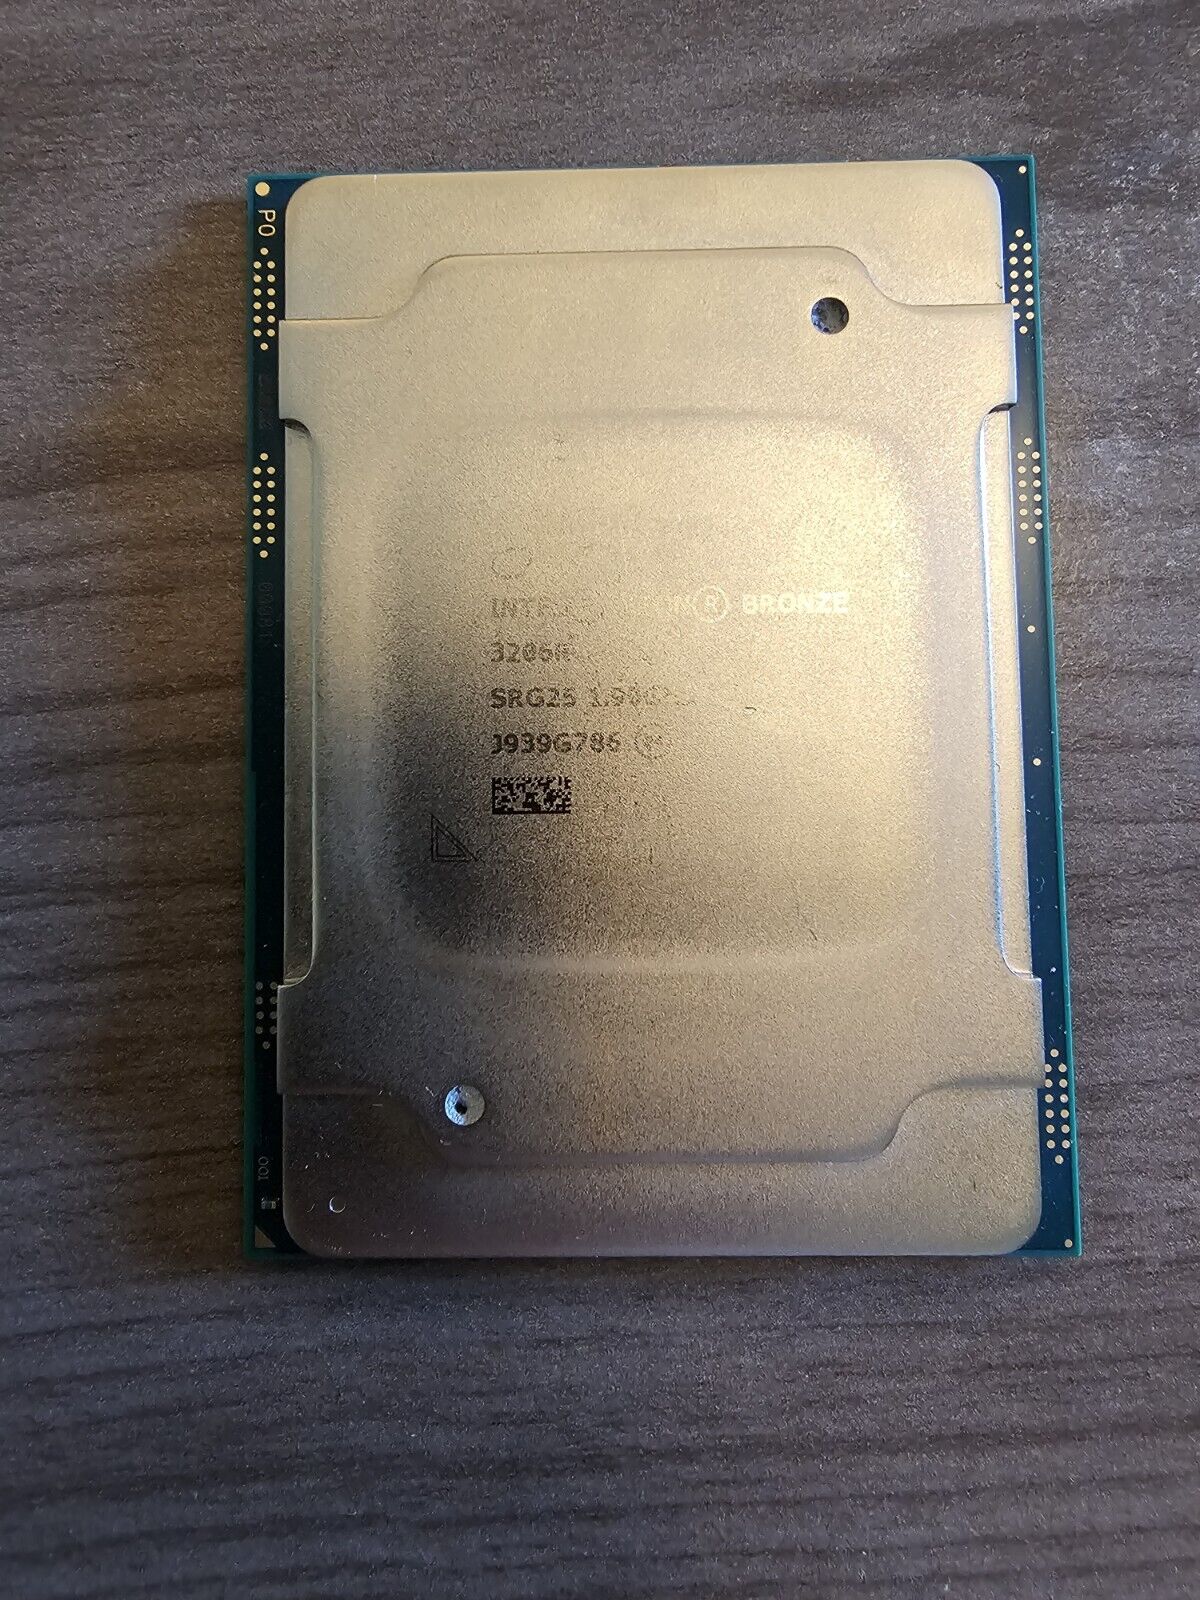 Intel Xeon Bronze 3206R 8 Core 1.9Ghz 11Mb Processor SRG25